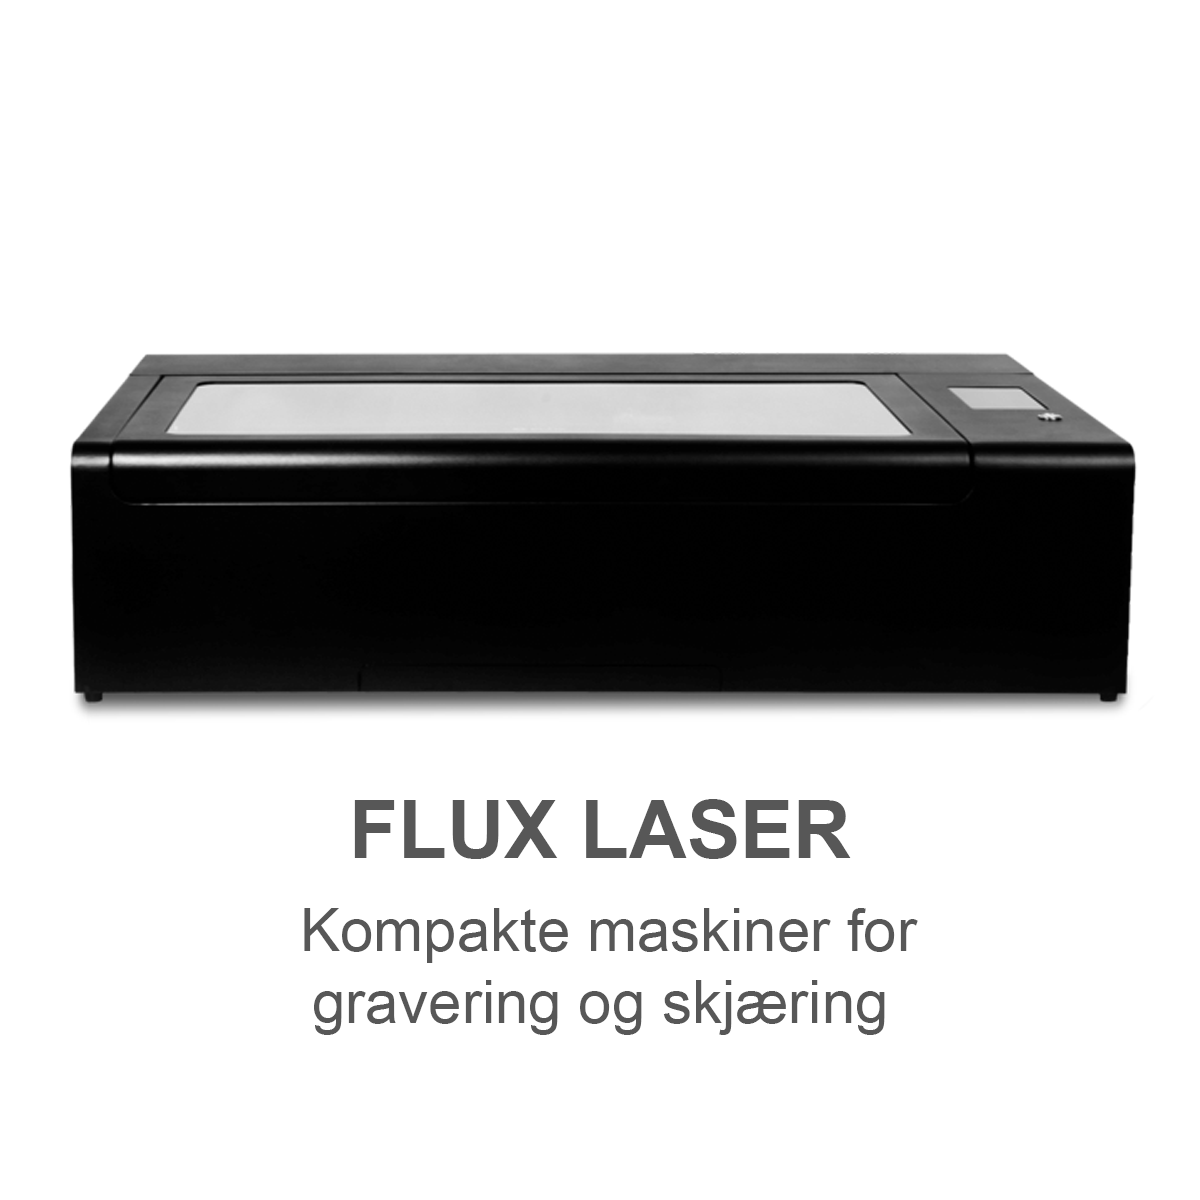 Flux laser - Kompakte maskiner for gravering og skjæring